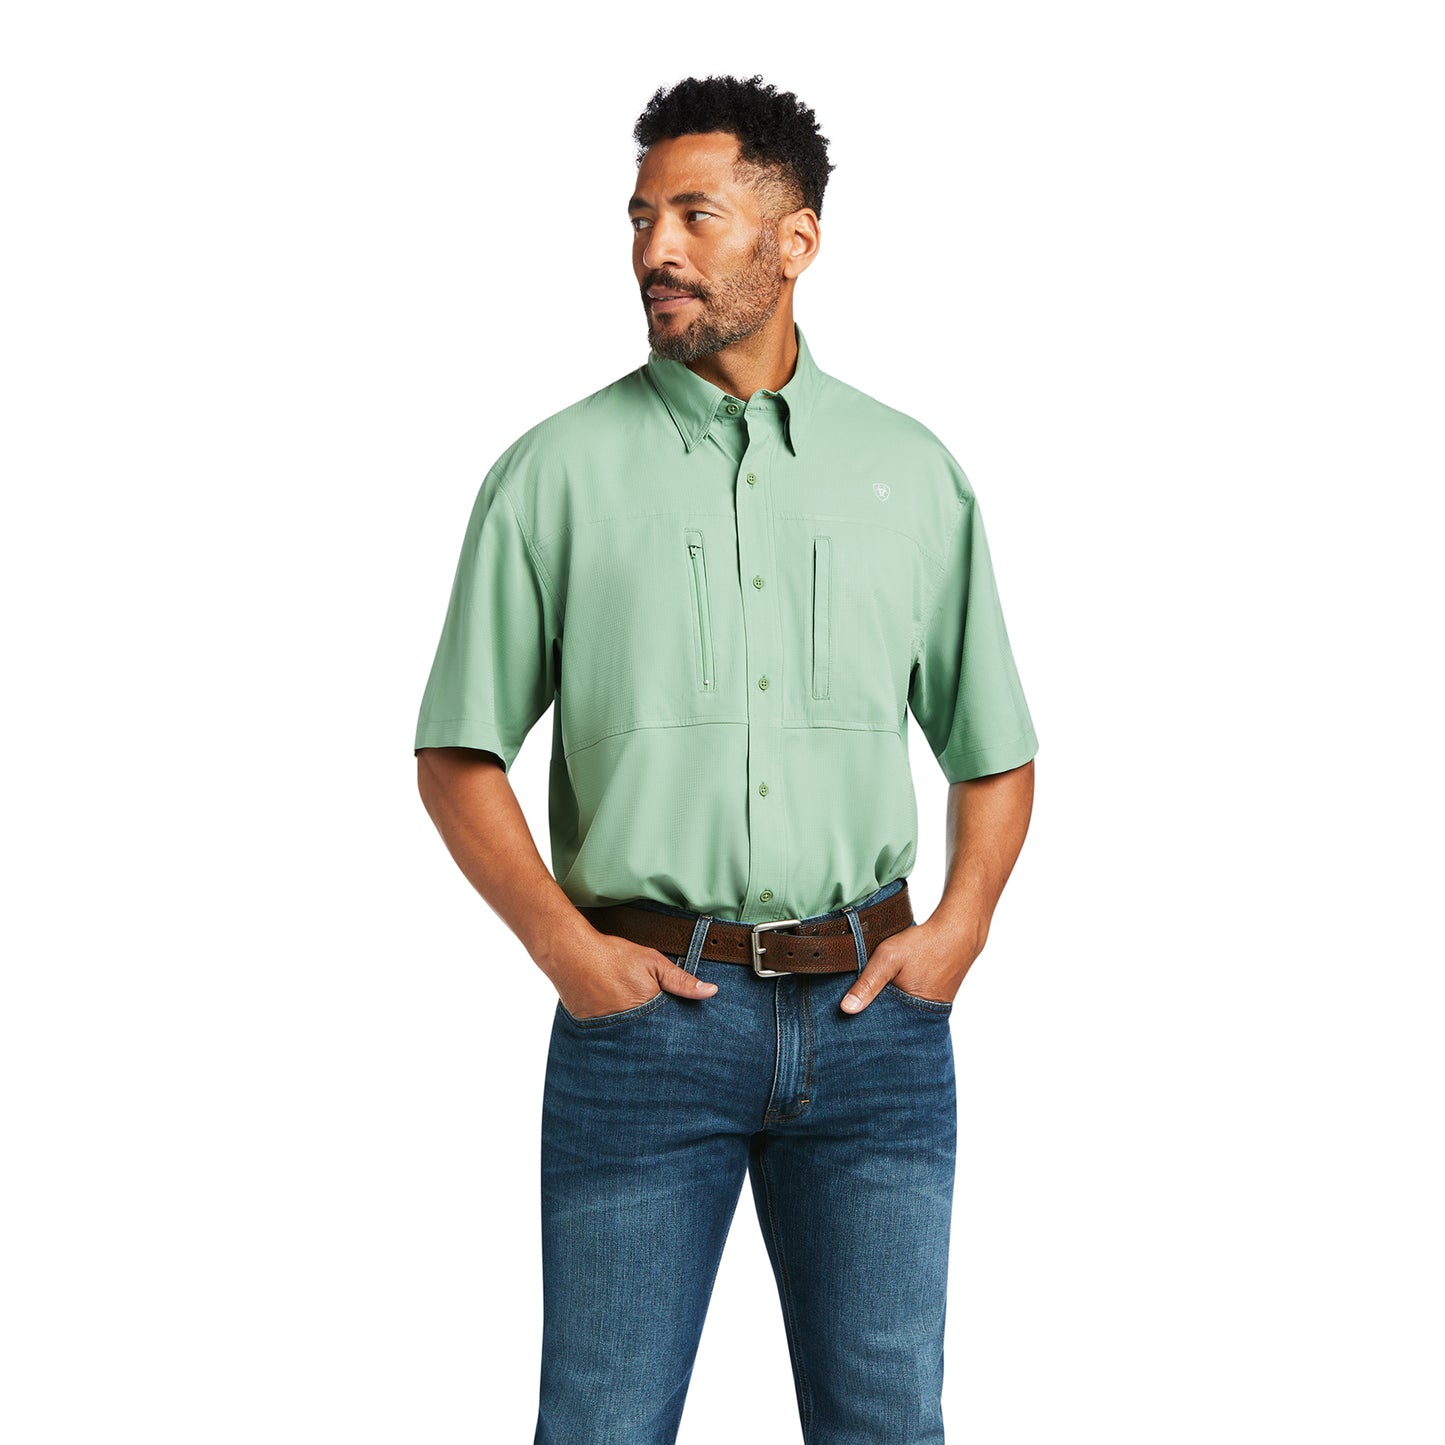 Ariat Men's Venttek Classic Turf Green Short Sleeve Shirt 10039373